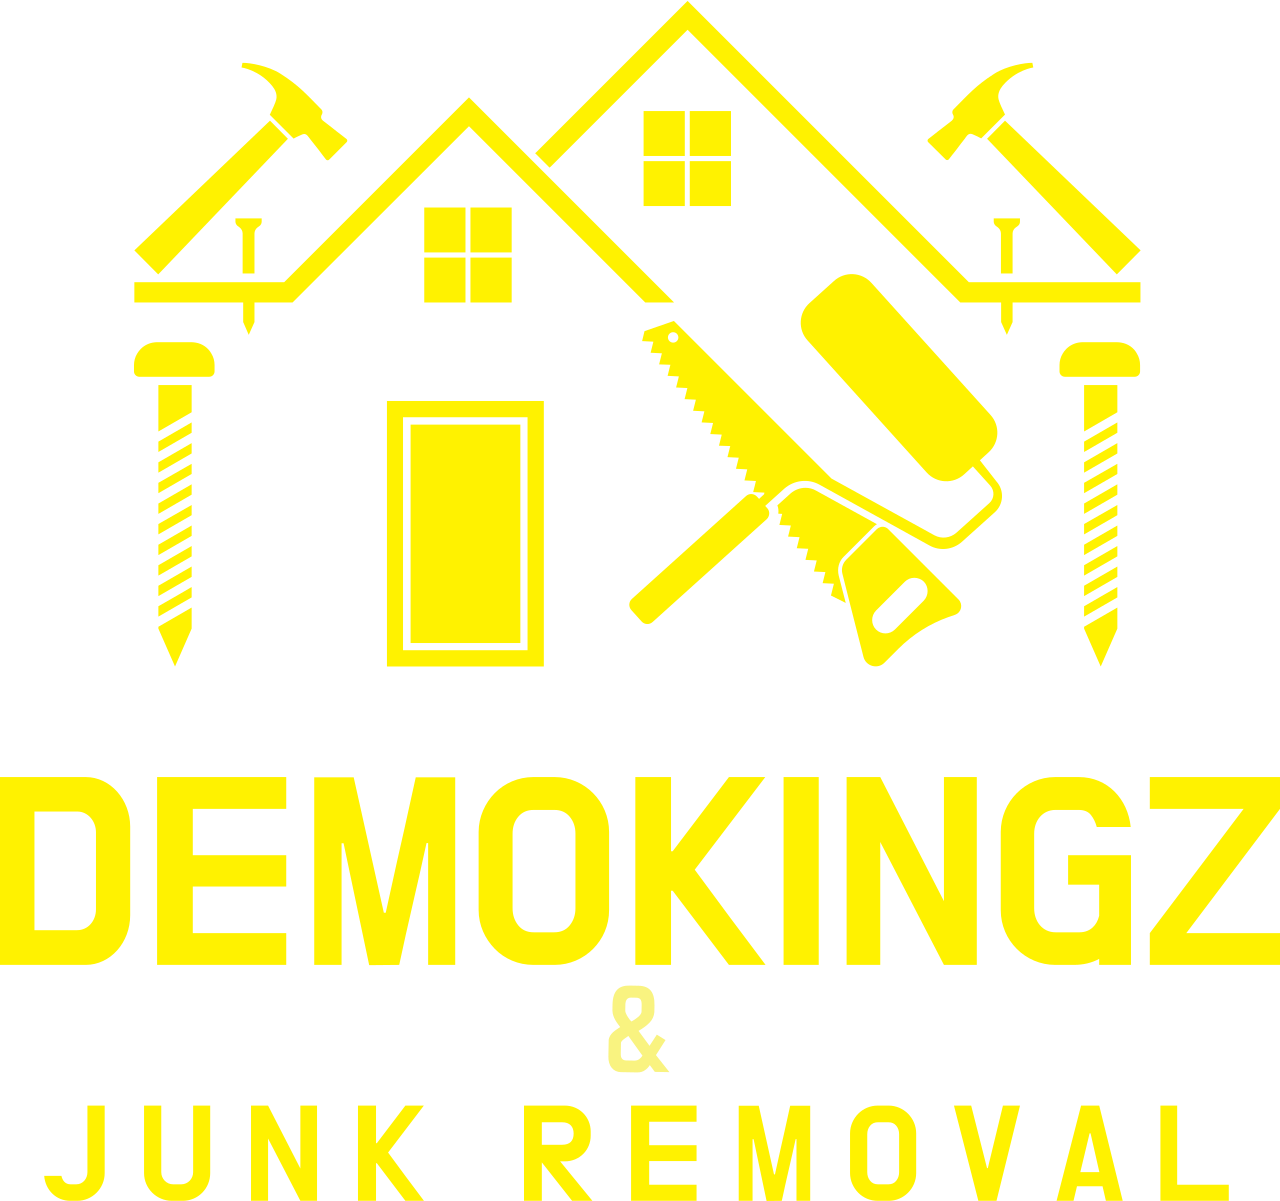 DemoKingz's logo